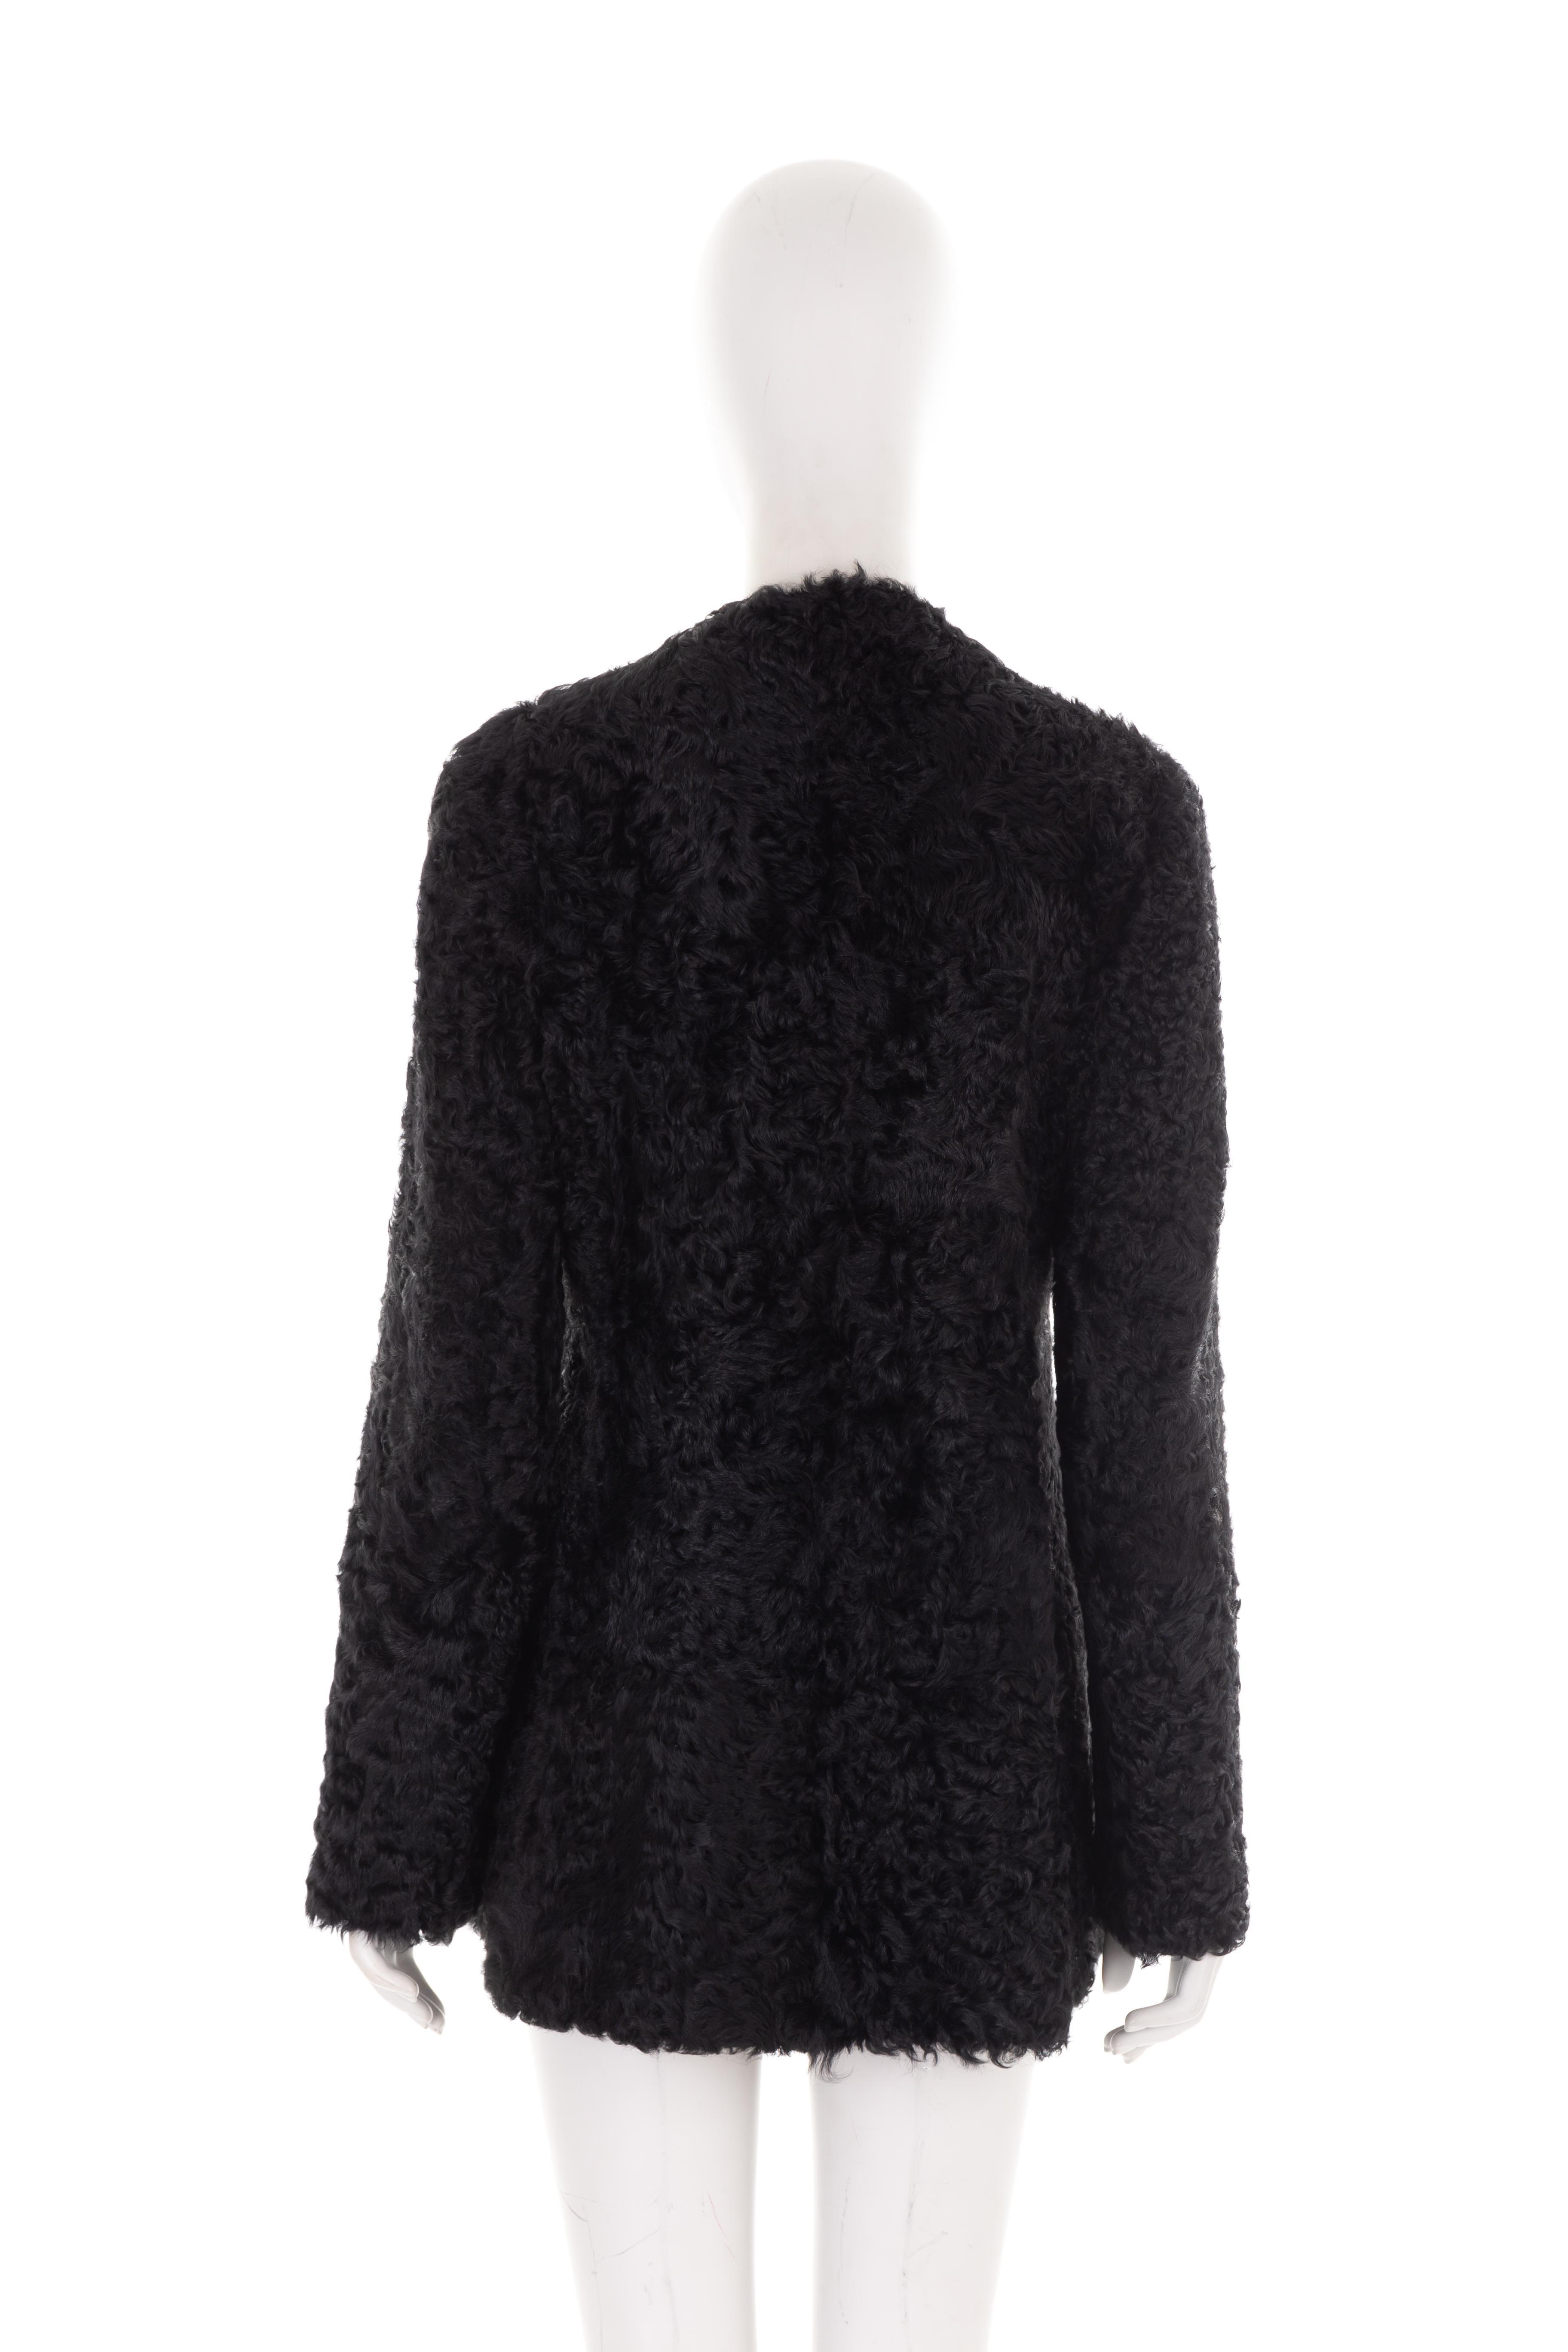 Prada by Miuccia Prada F/W 2011 black curly Mongolian lamb fur coat In Excellent Condition For Sale In Rome, IT